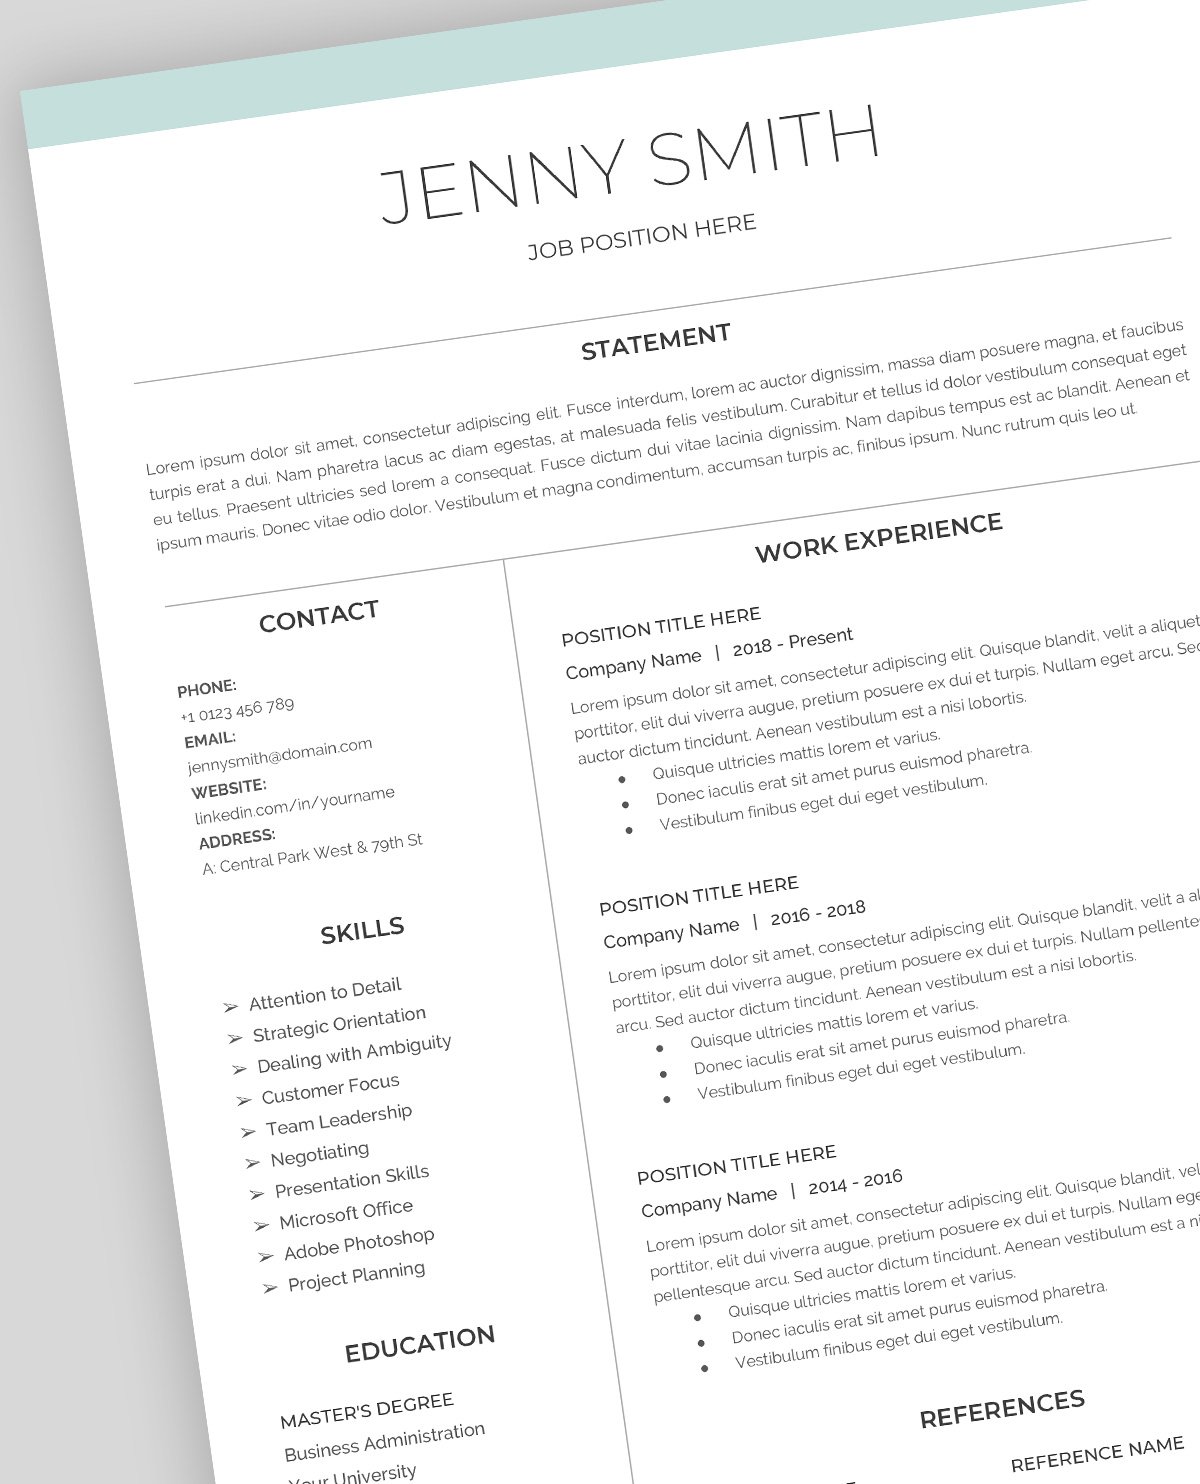 Resume Template, CV, Google Docs preview image.